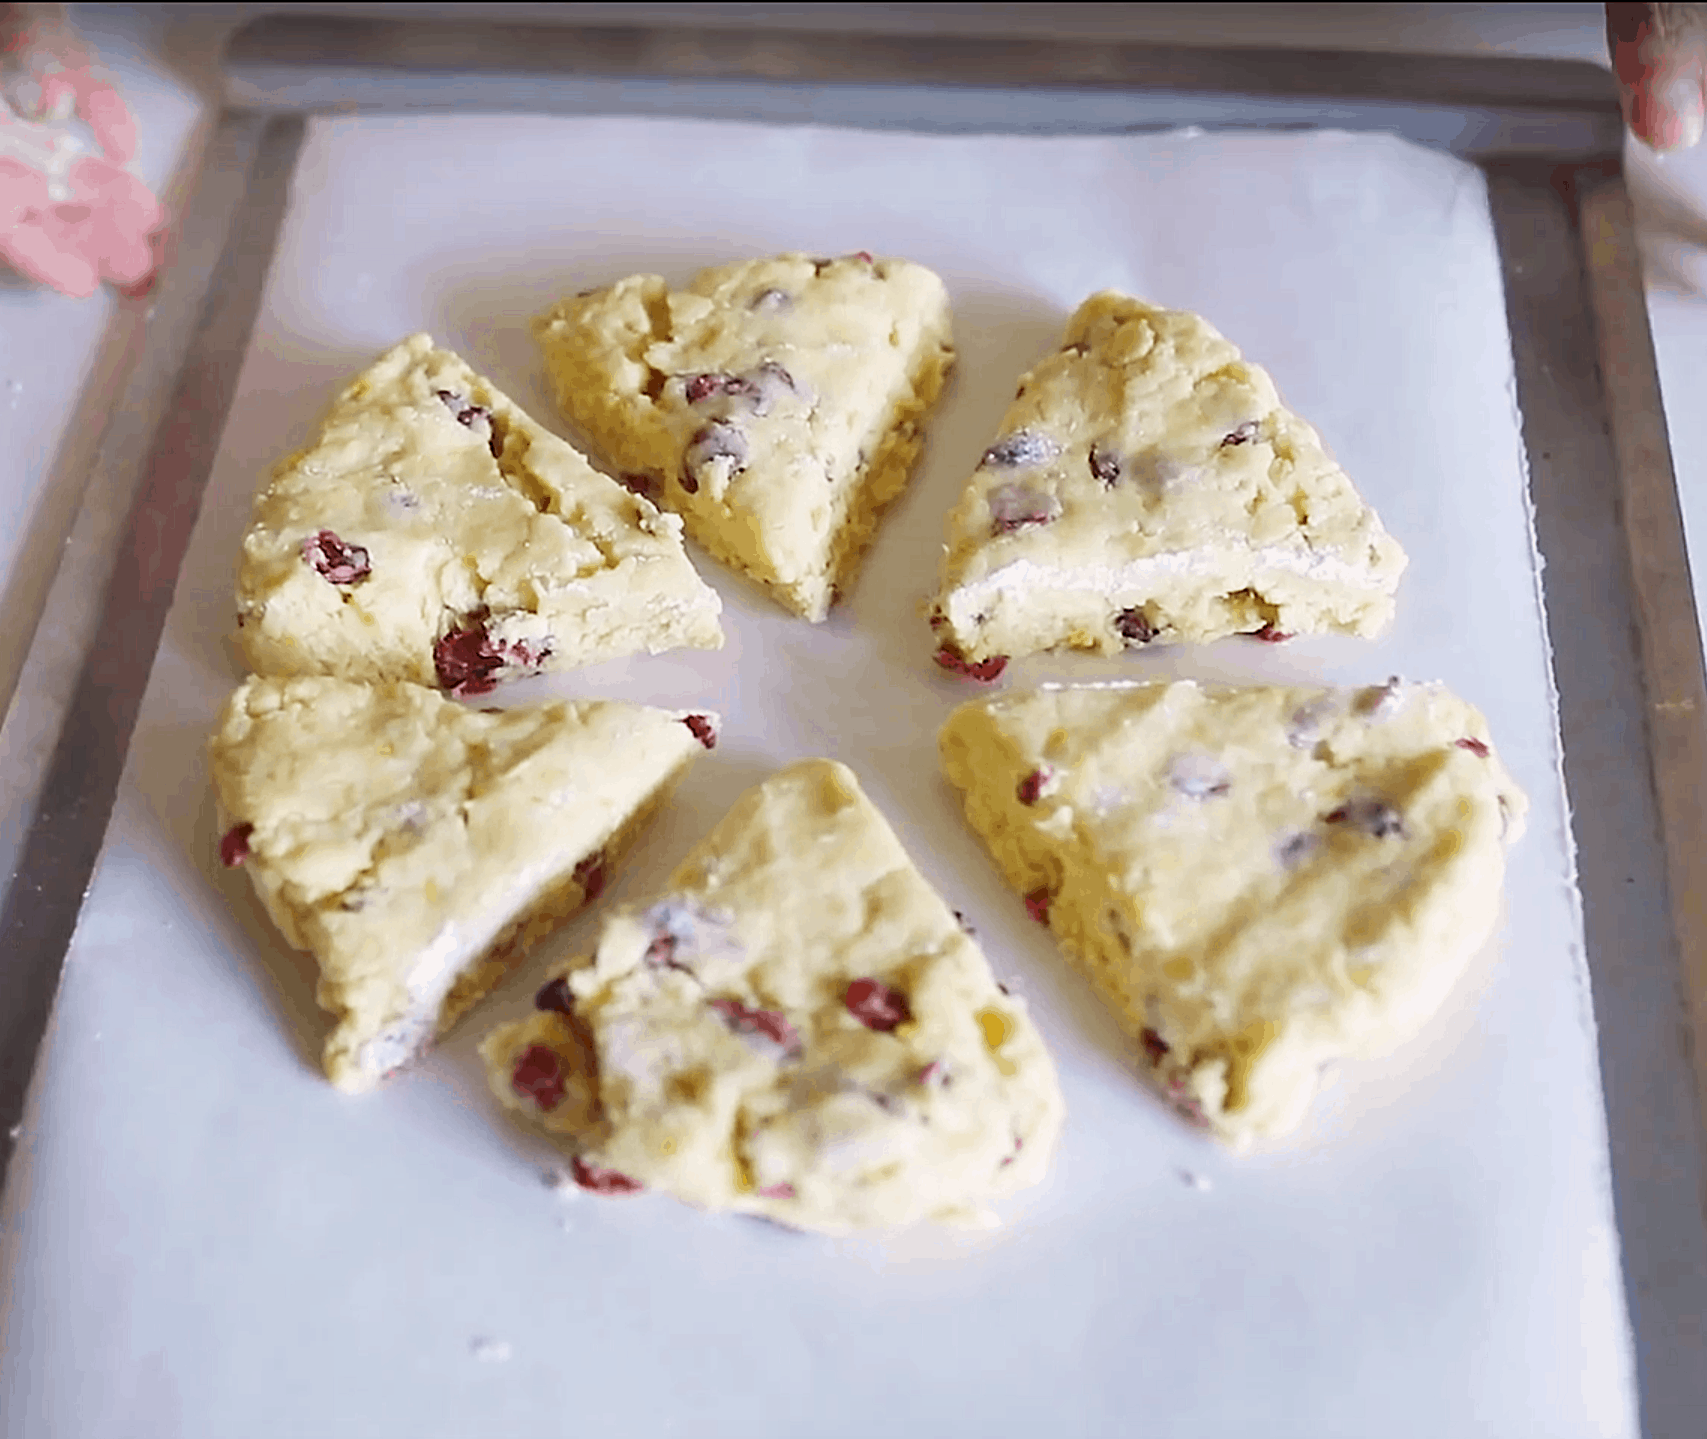 Round of unbaked triangular scones on baking sheet